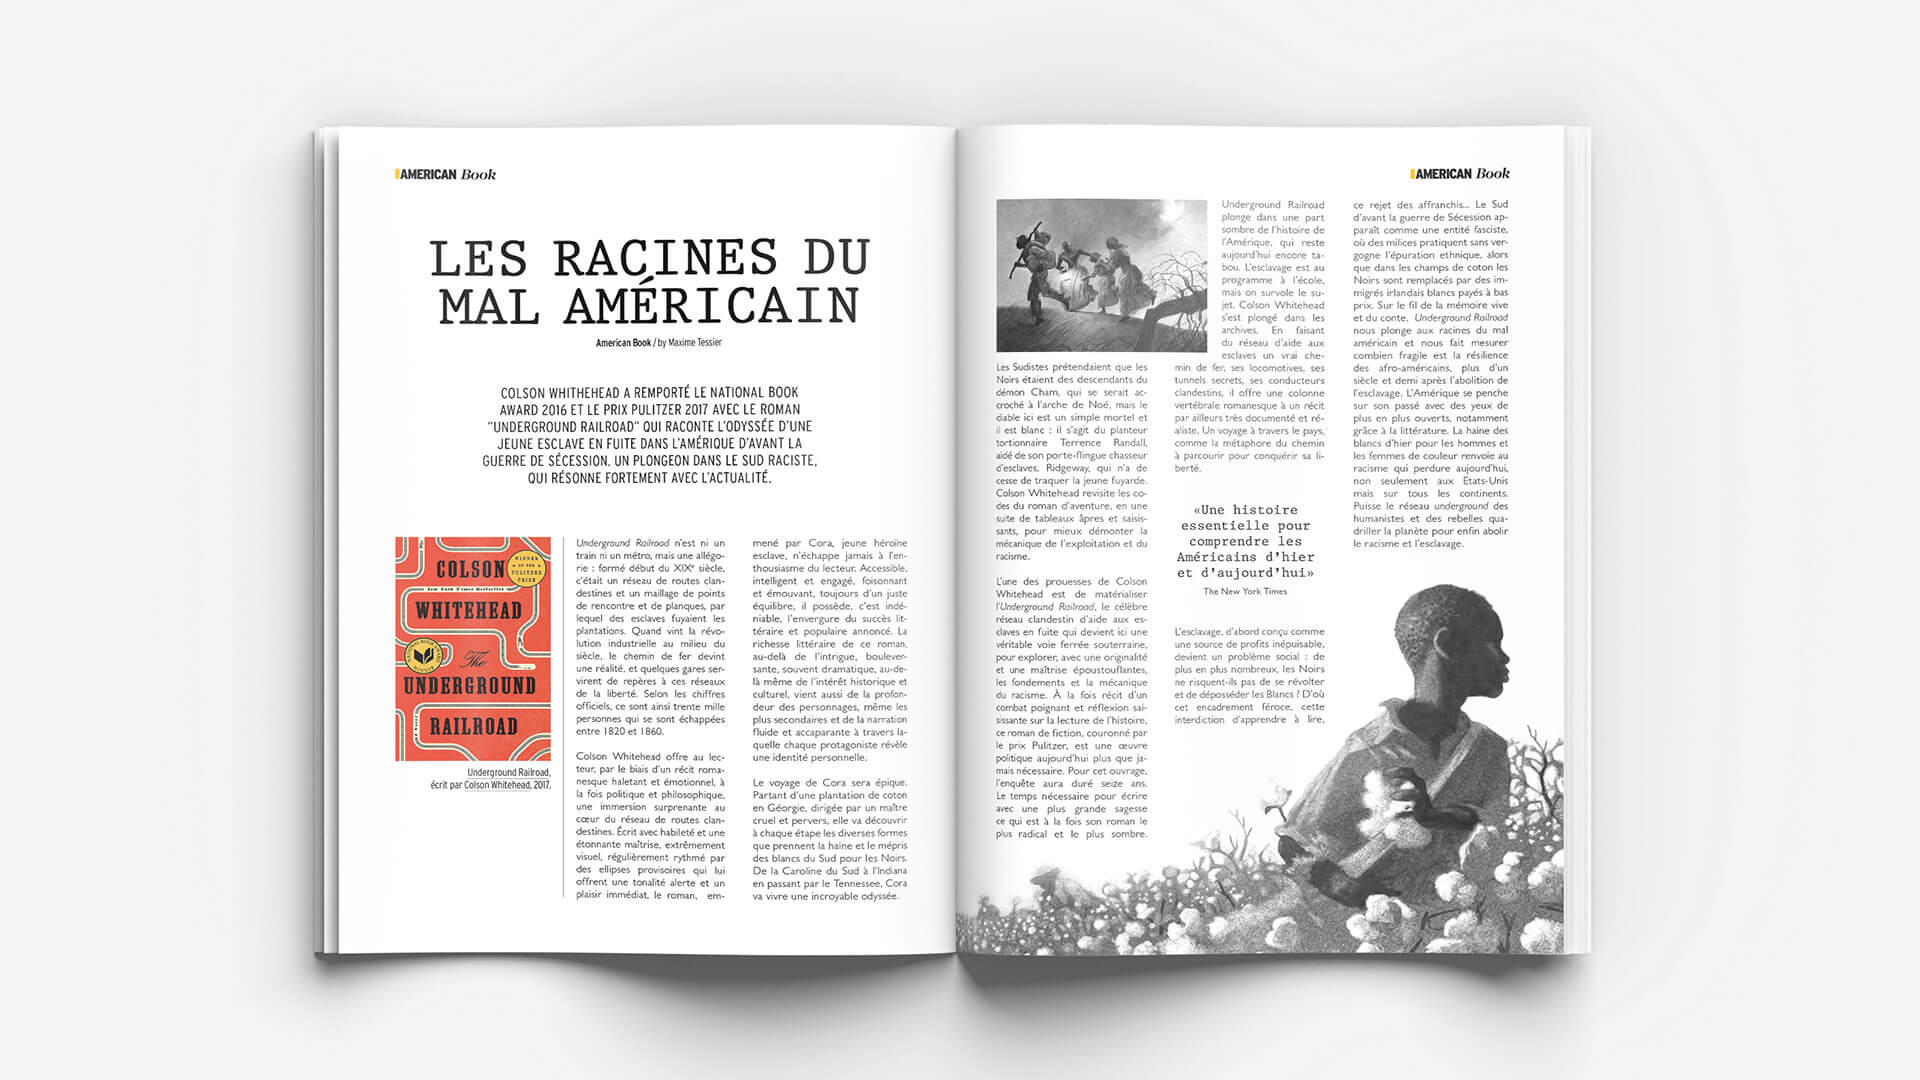 American Book Colson Whitehead The Underground Railroad magazine layout